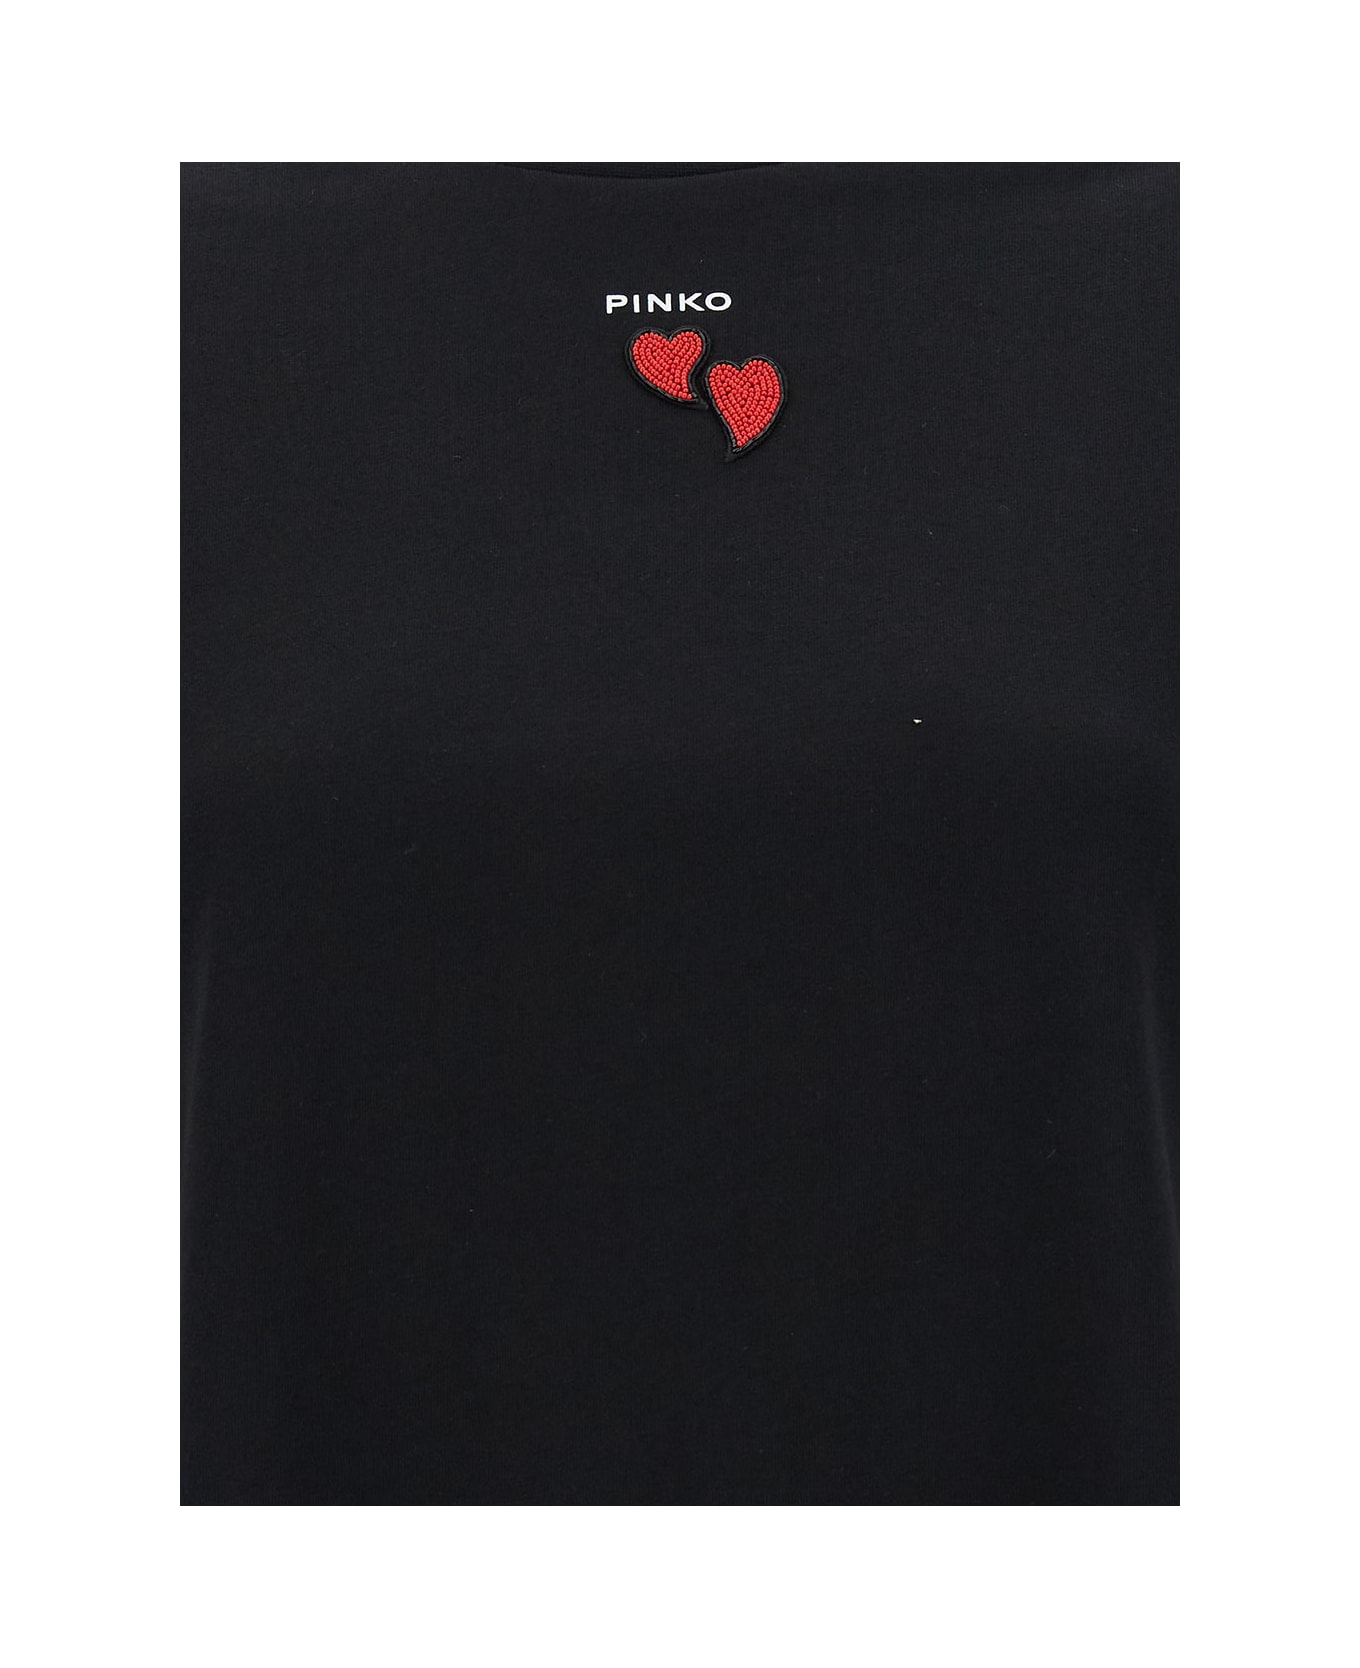 Pinko T-shirt Embroidery Hearts - Black